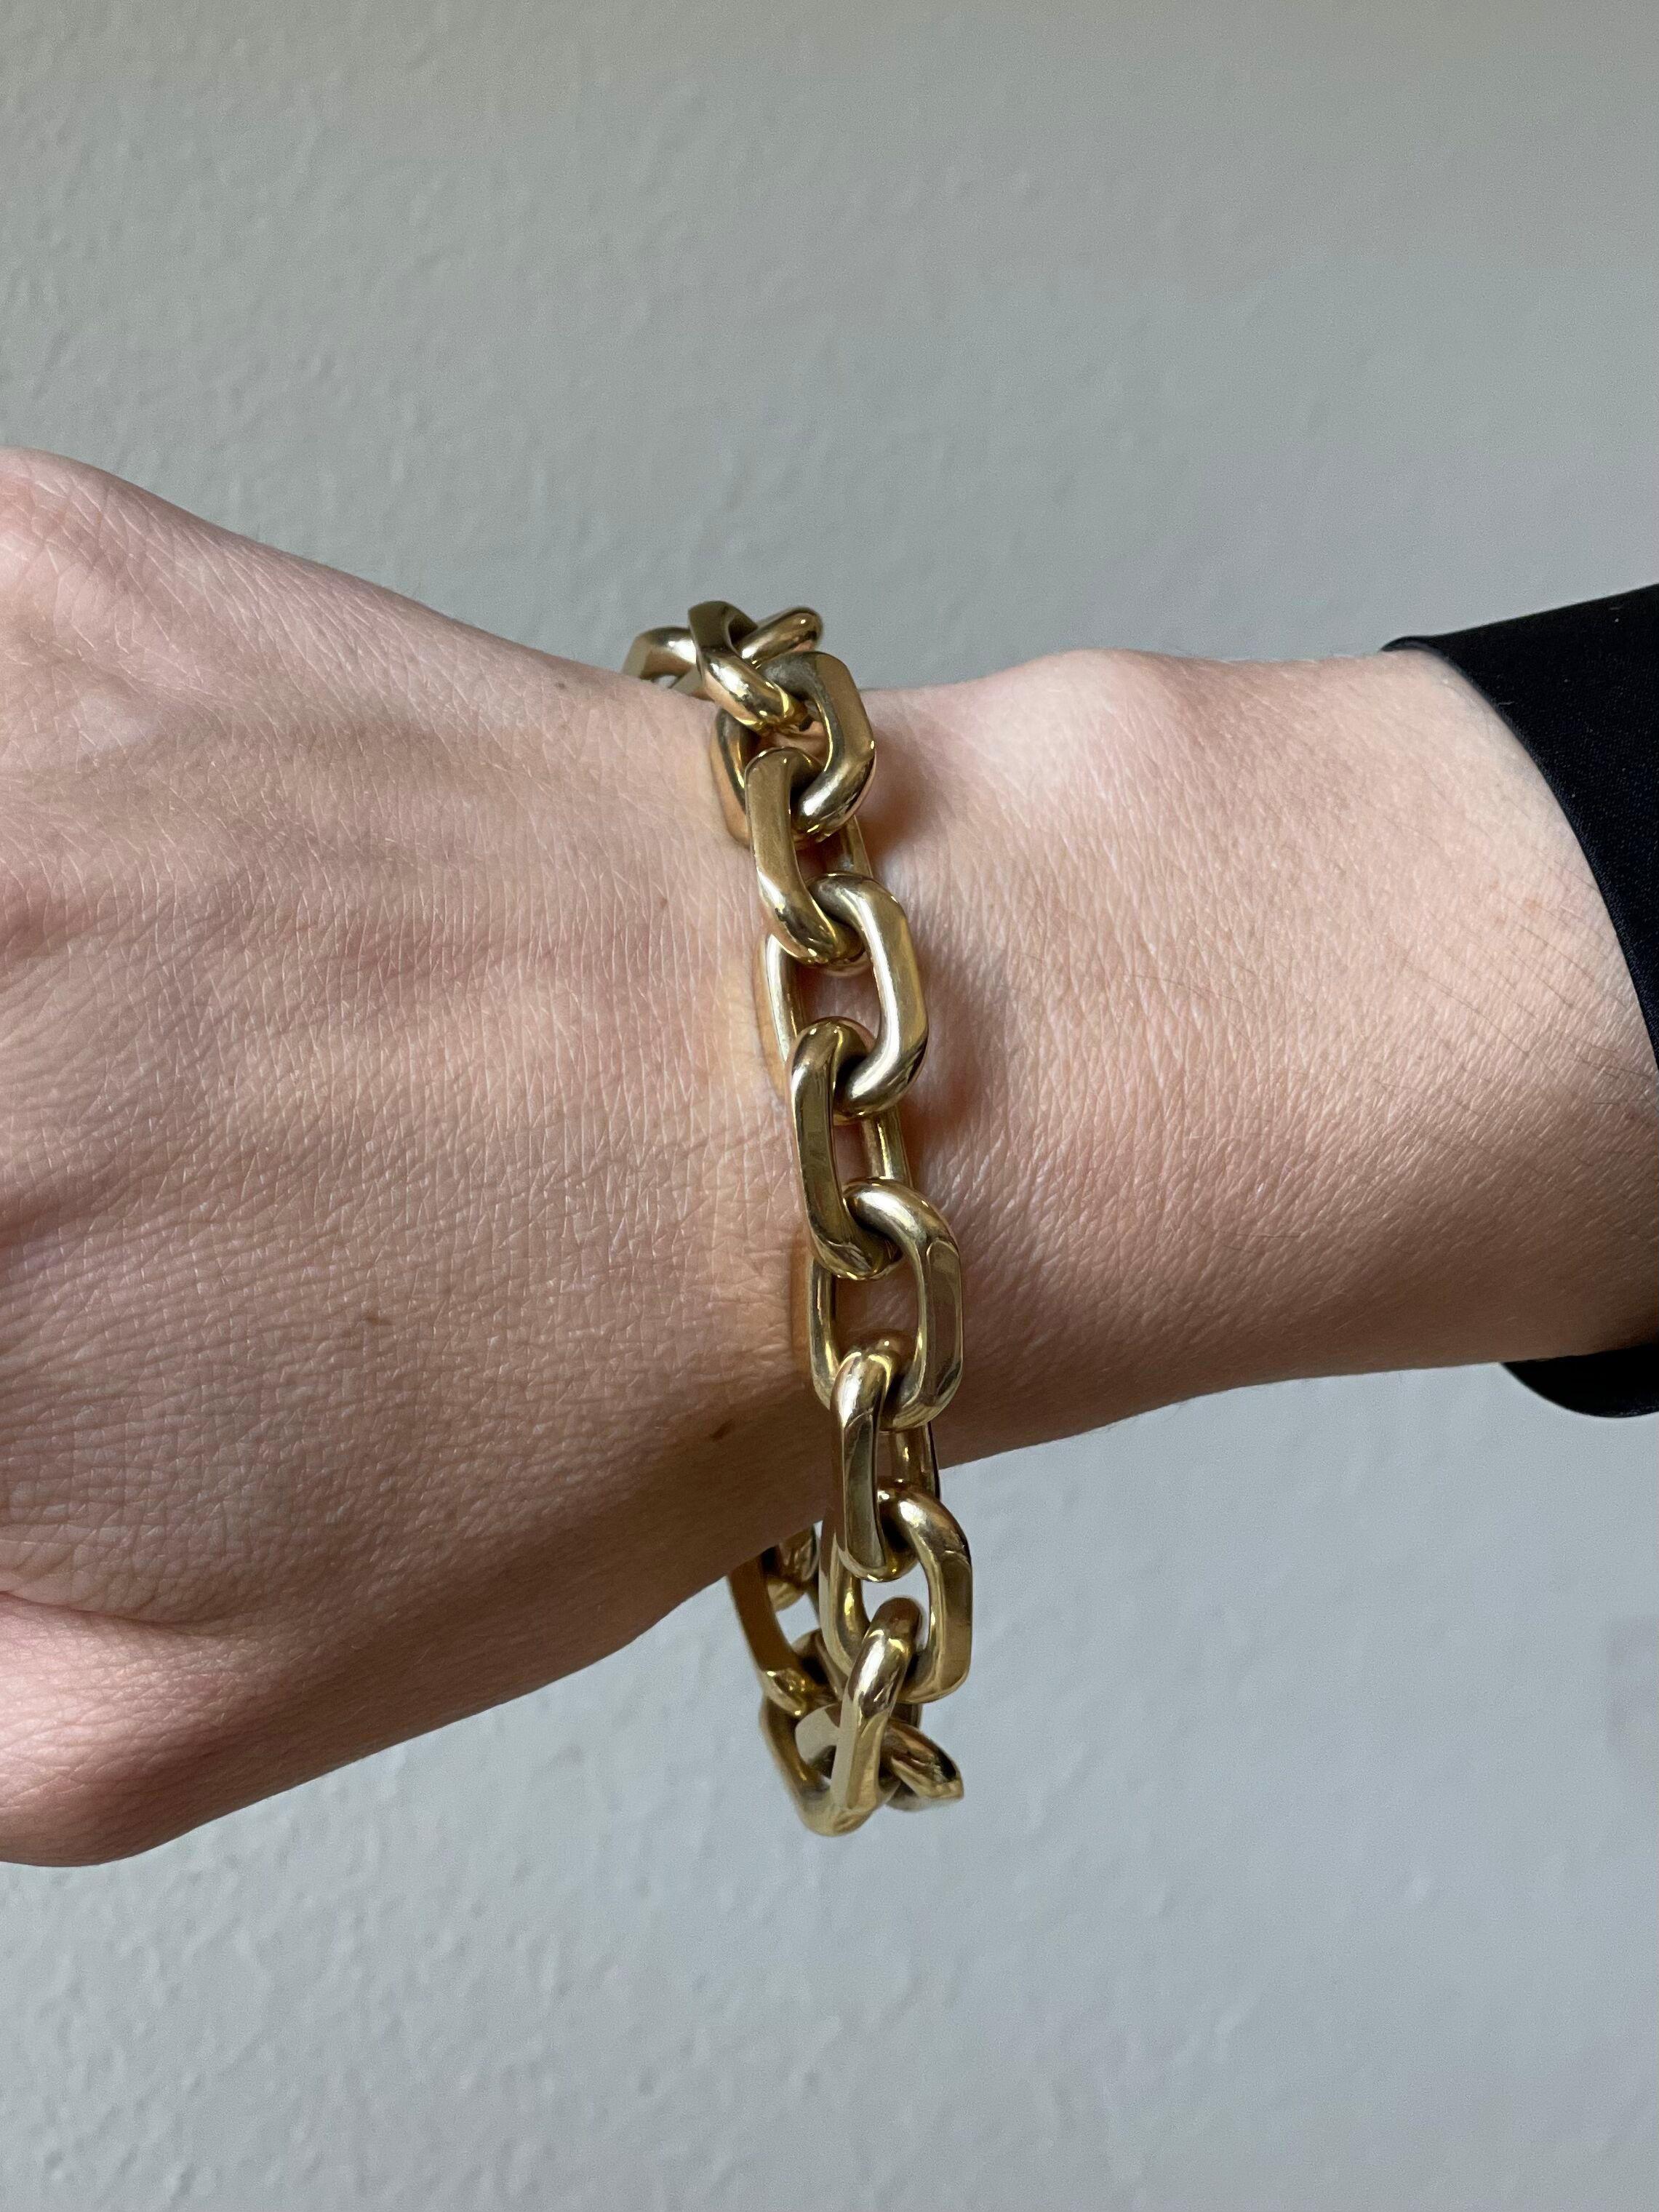 Vintage, circa 1980s 18k gold link bracelet by Cartier. Bracelet is 8.25